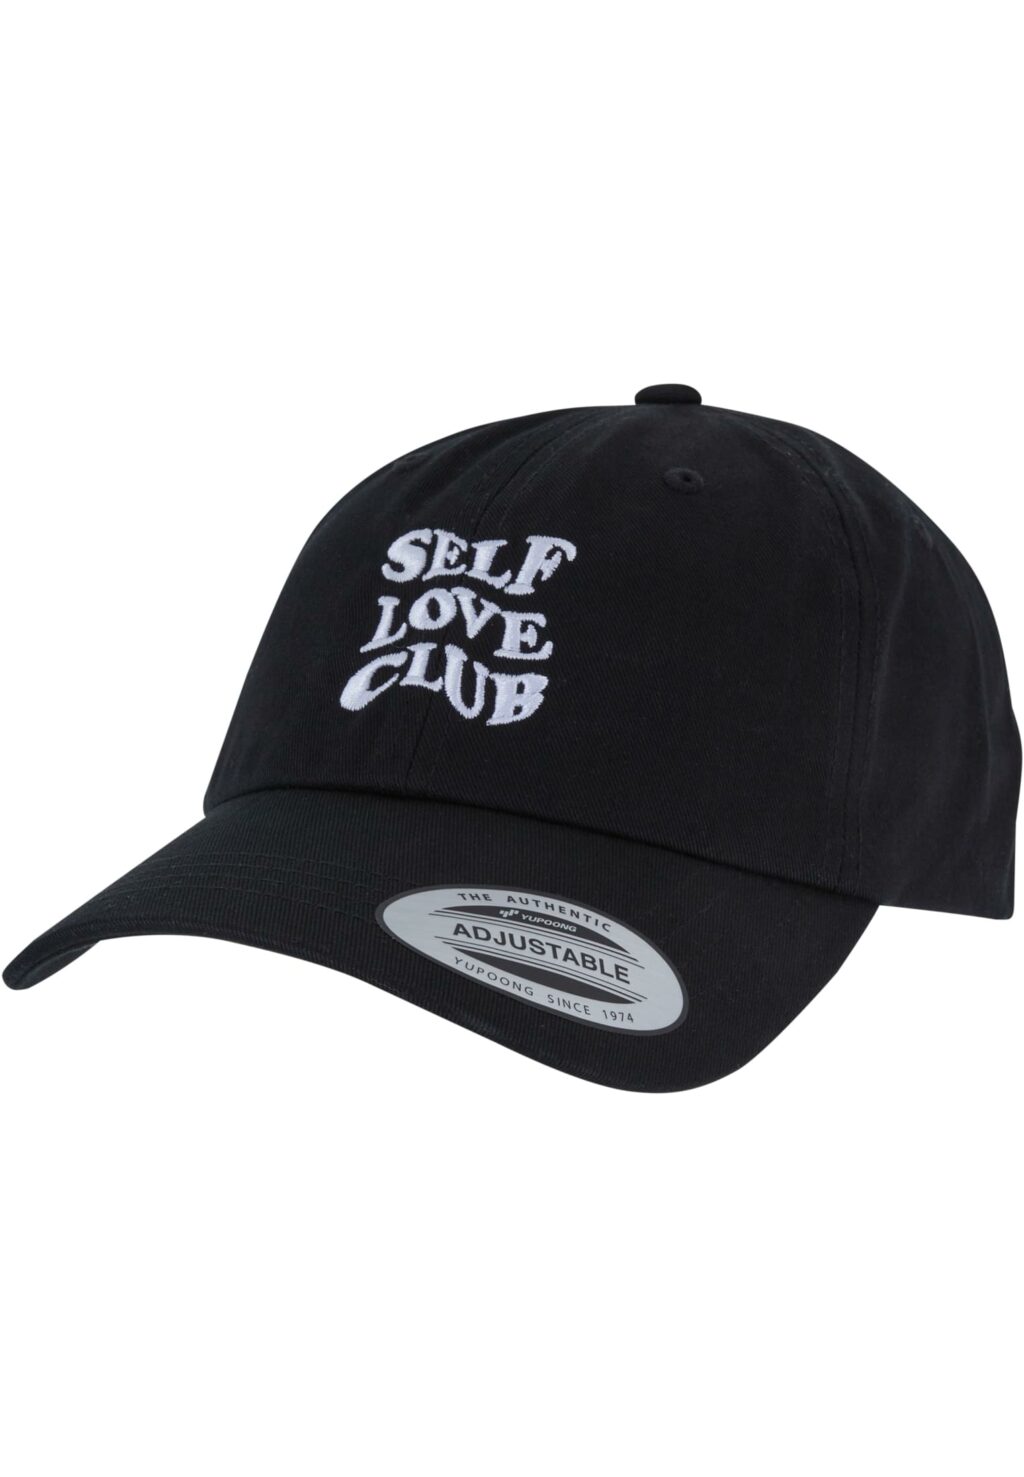 Self Love Club Cap black one BE073